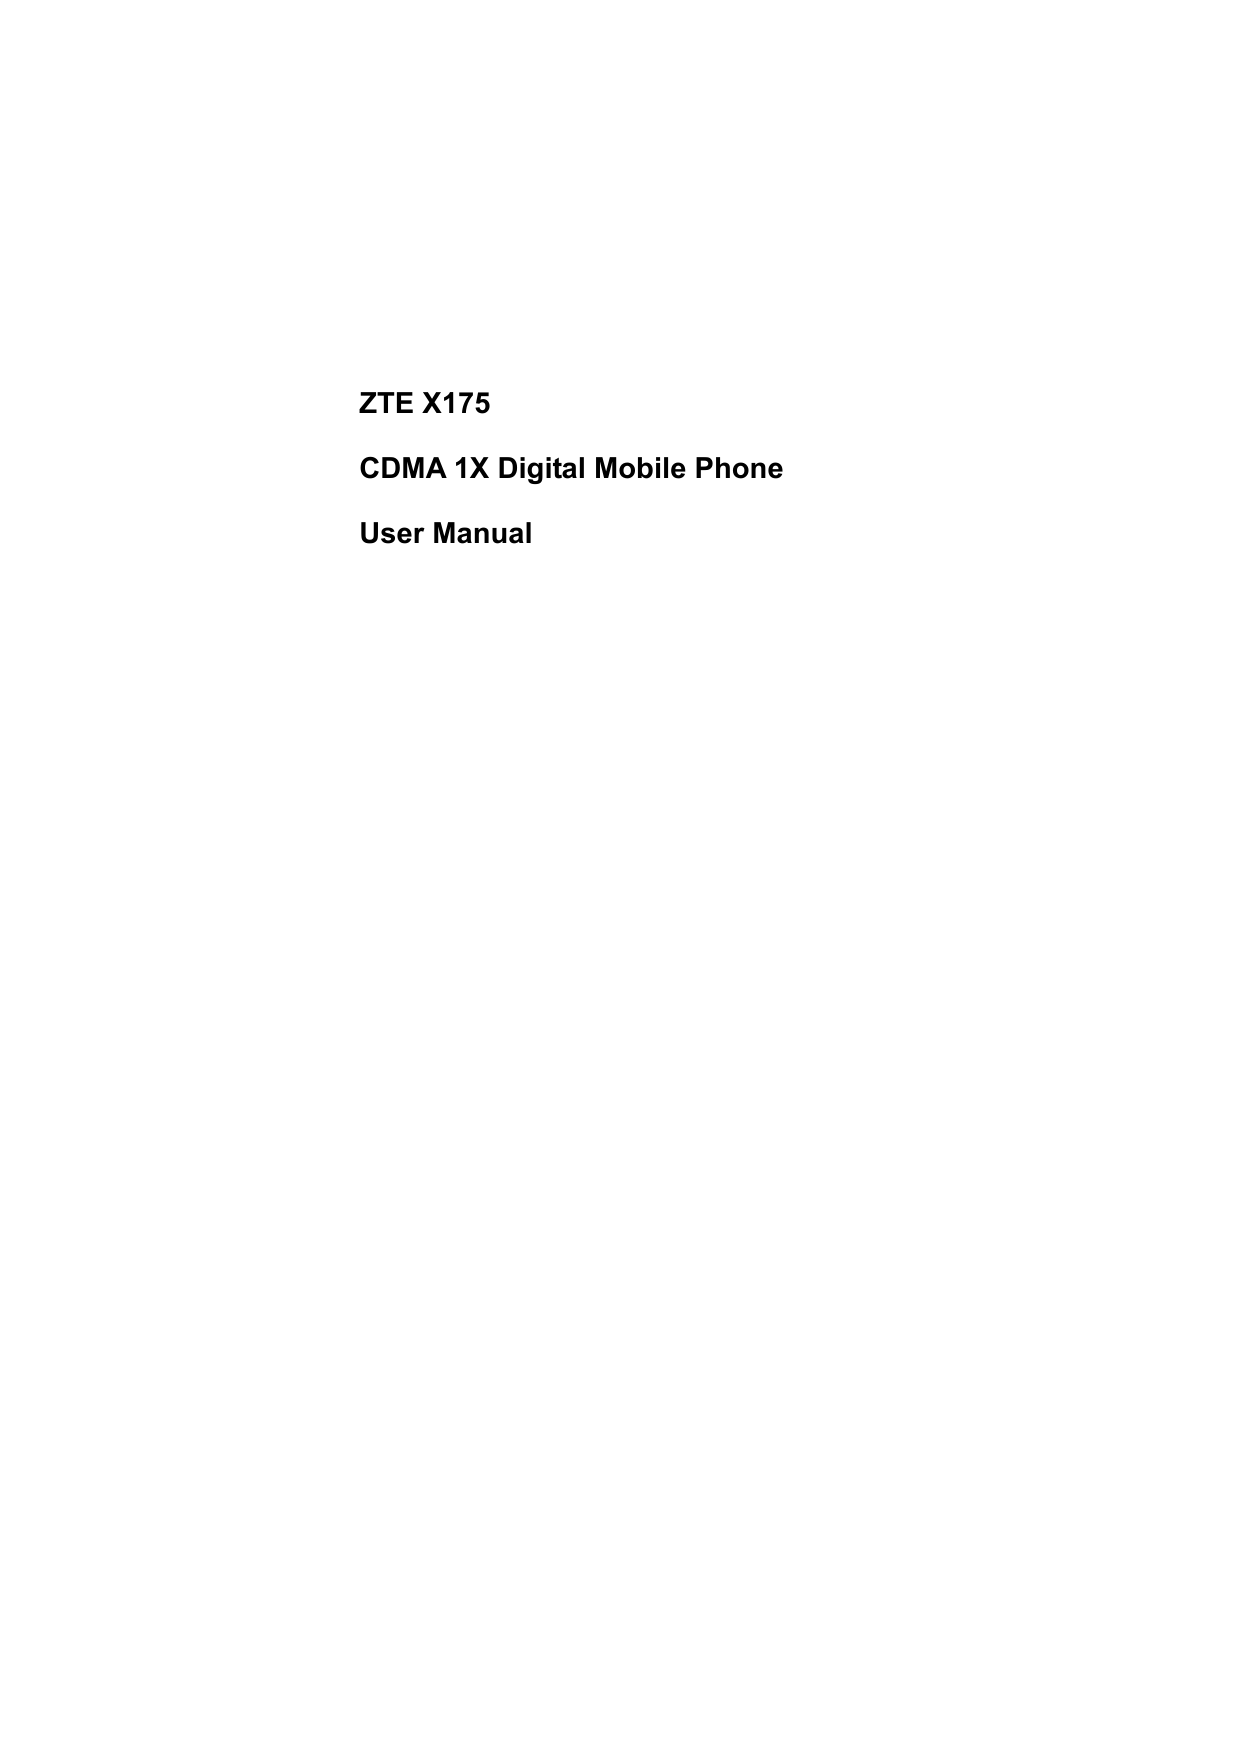      ZTE X175 CDMA 1X Digital Mobile Phone User Manual    